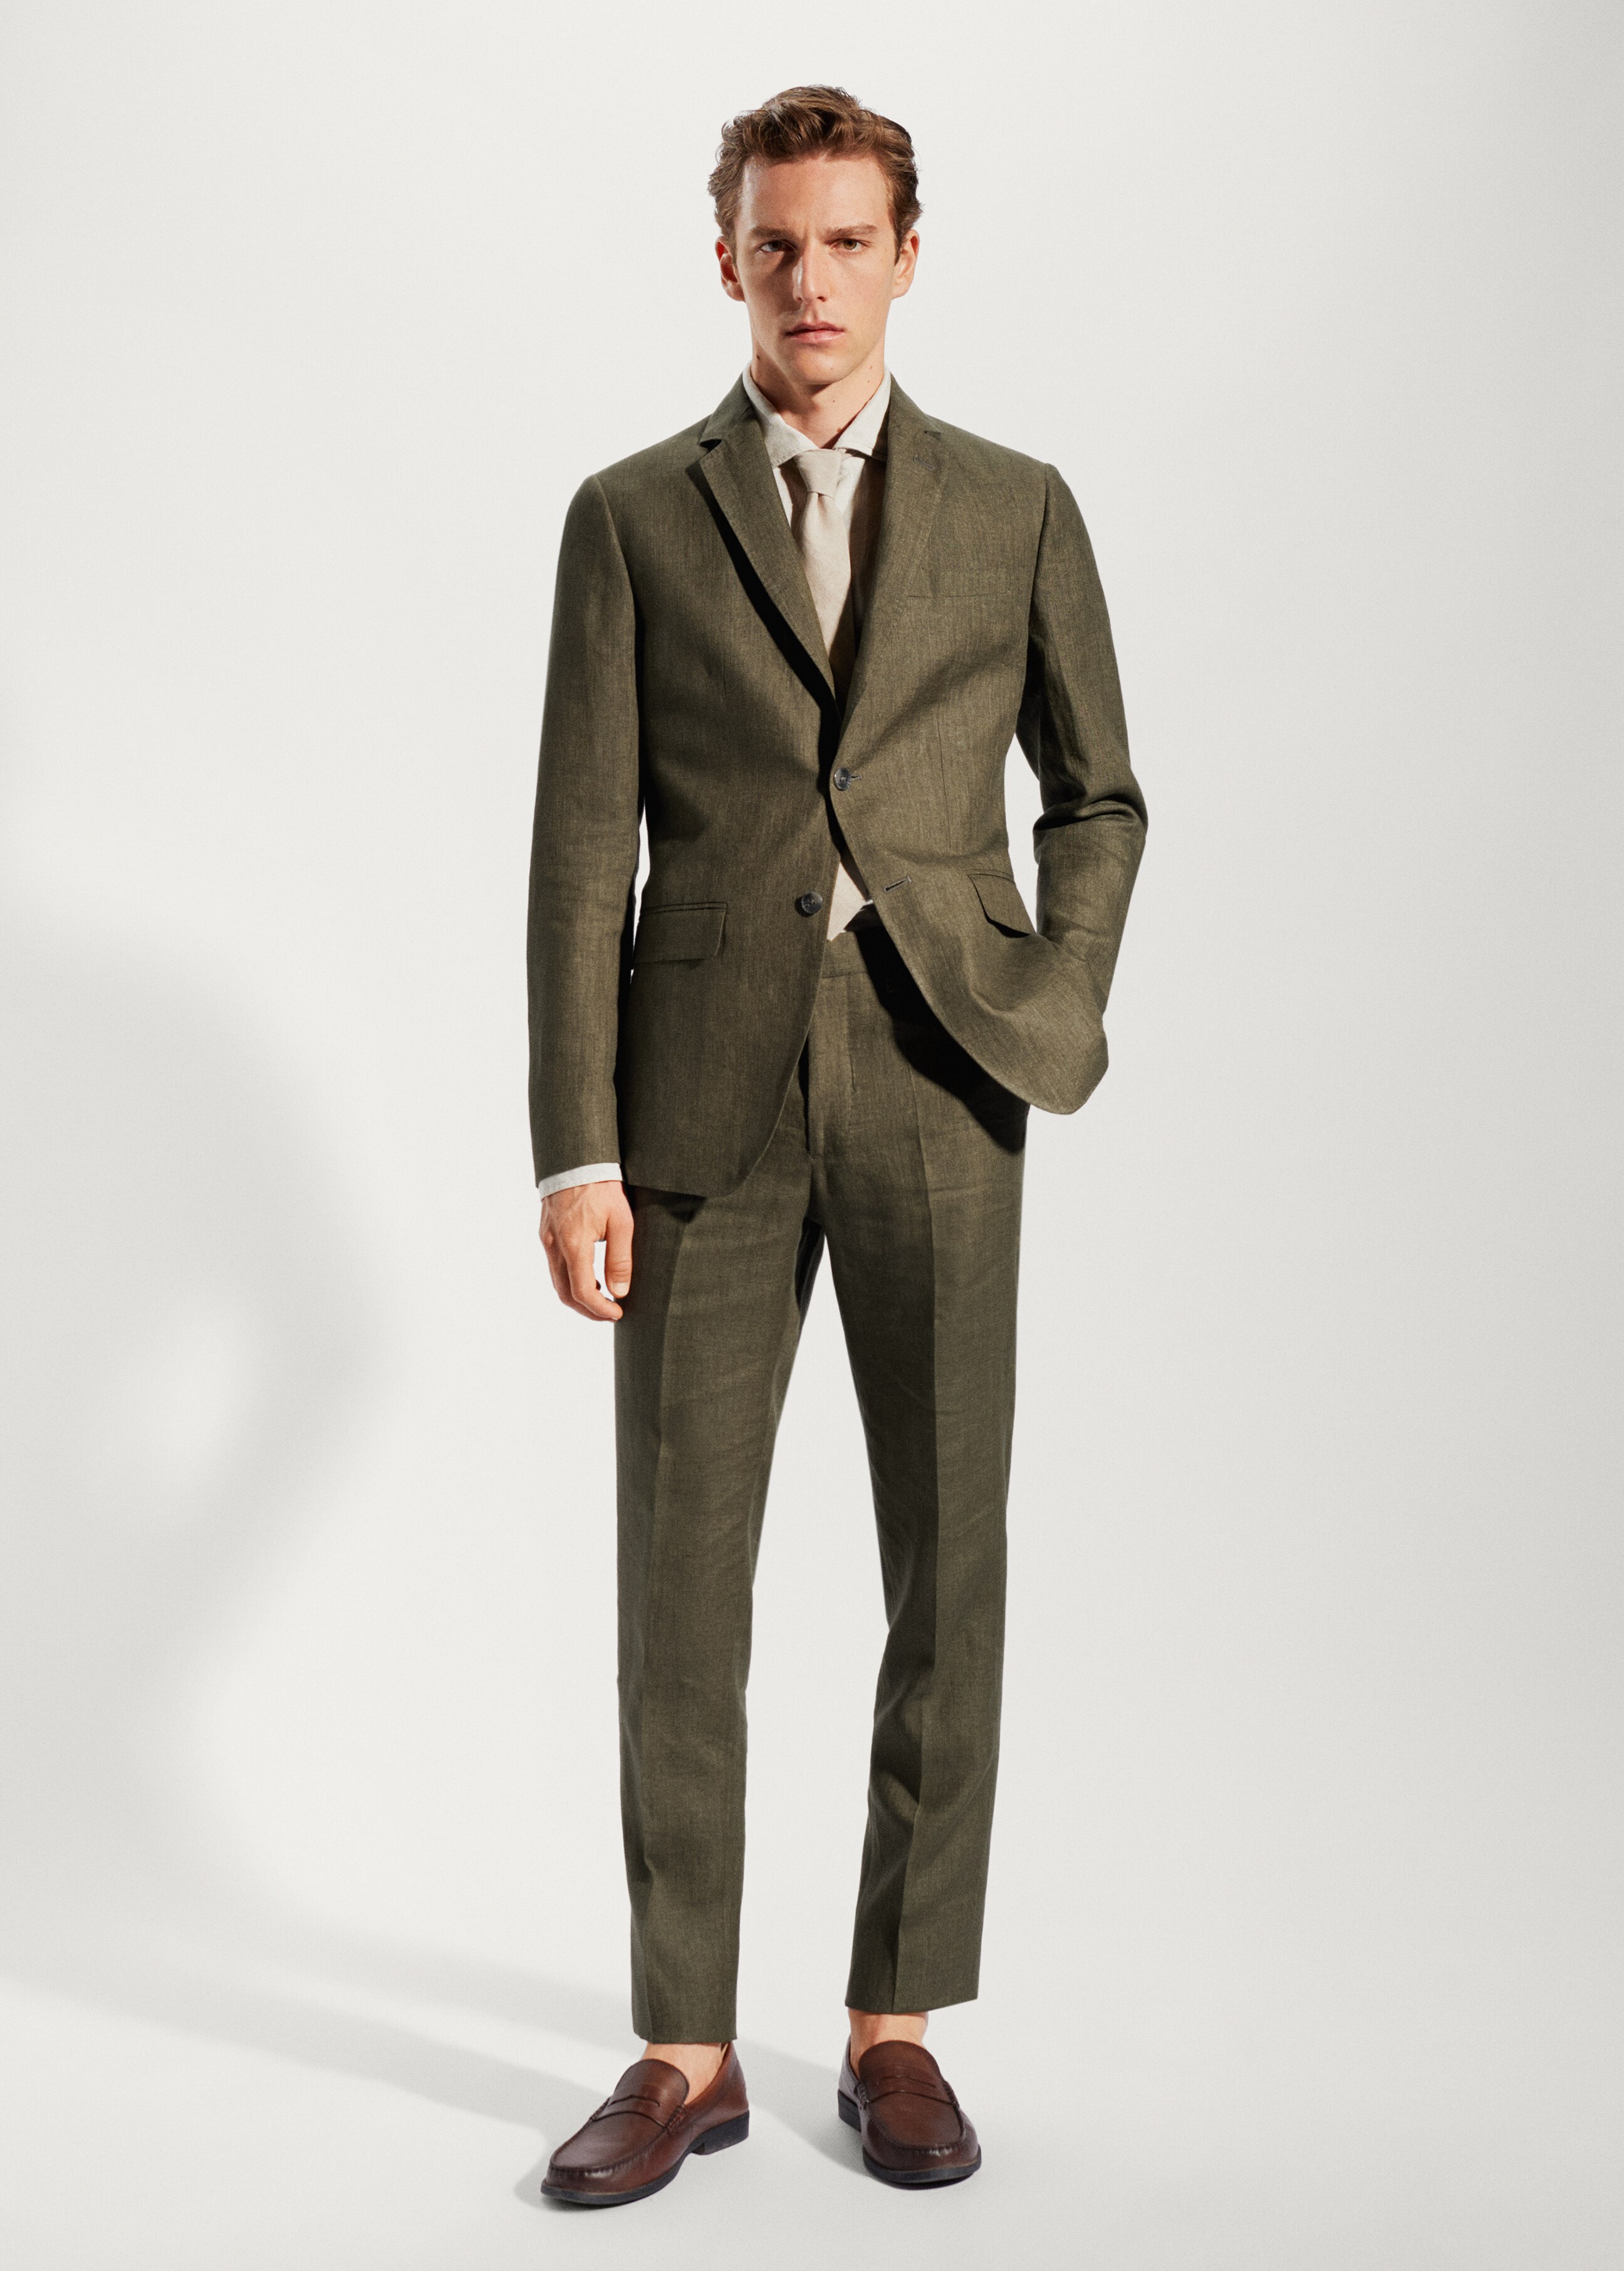 100% linen suit blazer - General plane